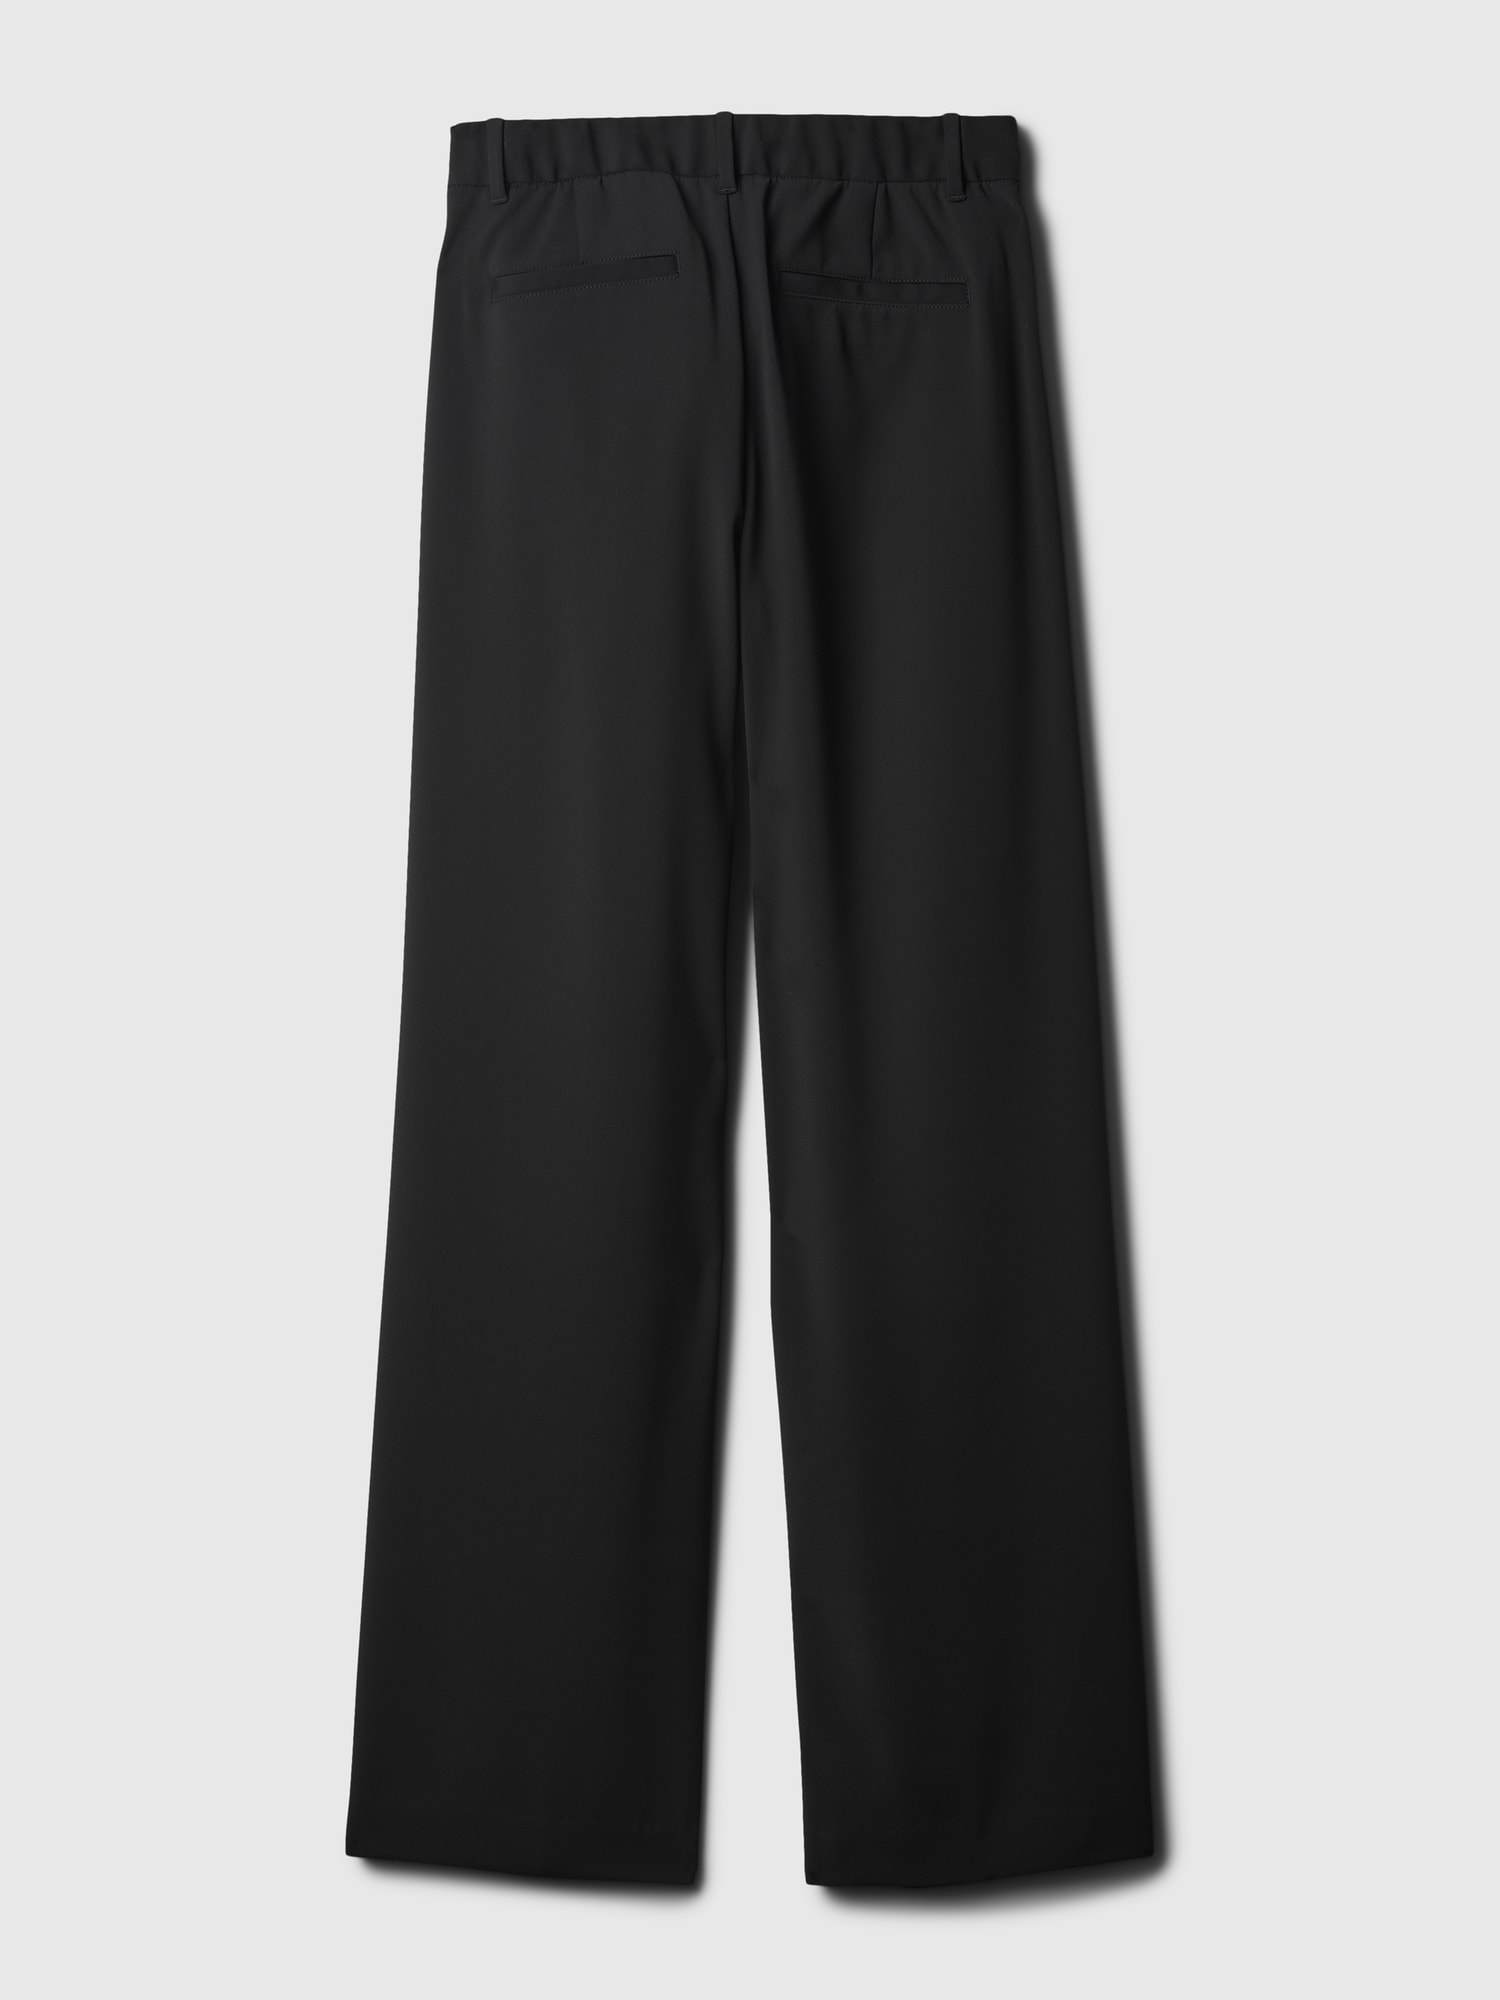 PLUS SIZE 90s High Waist Pleated Black Pants Dark Academia Minimal Business  Casual Pleated High Rise Pants Size 14 34 Waist 